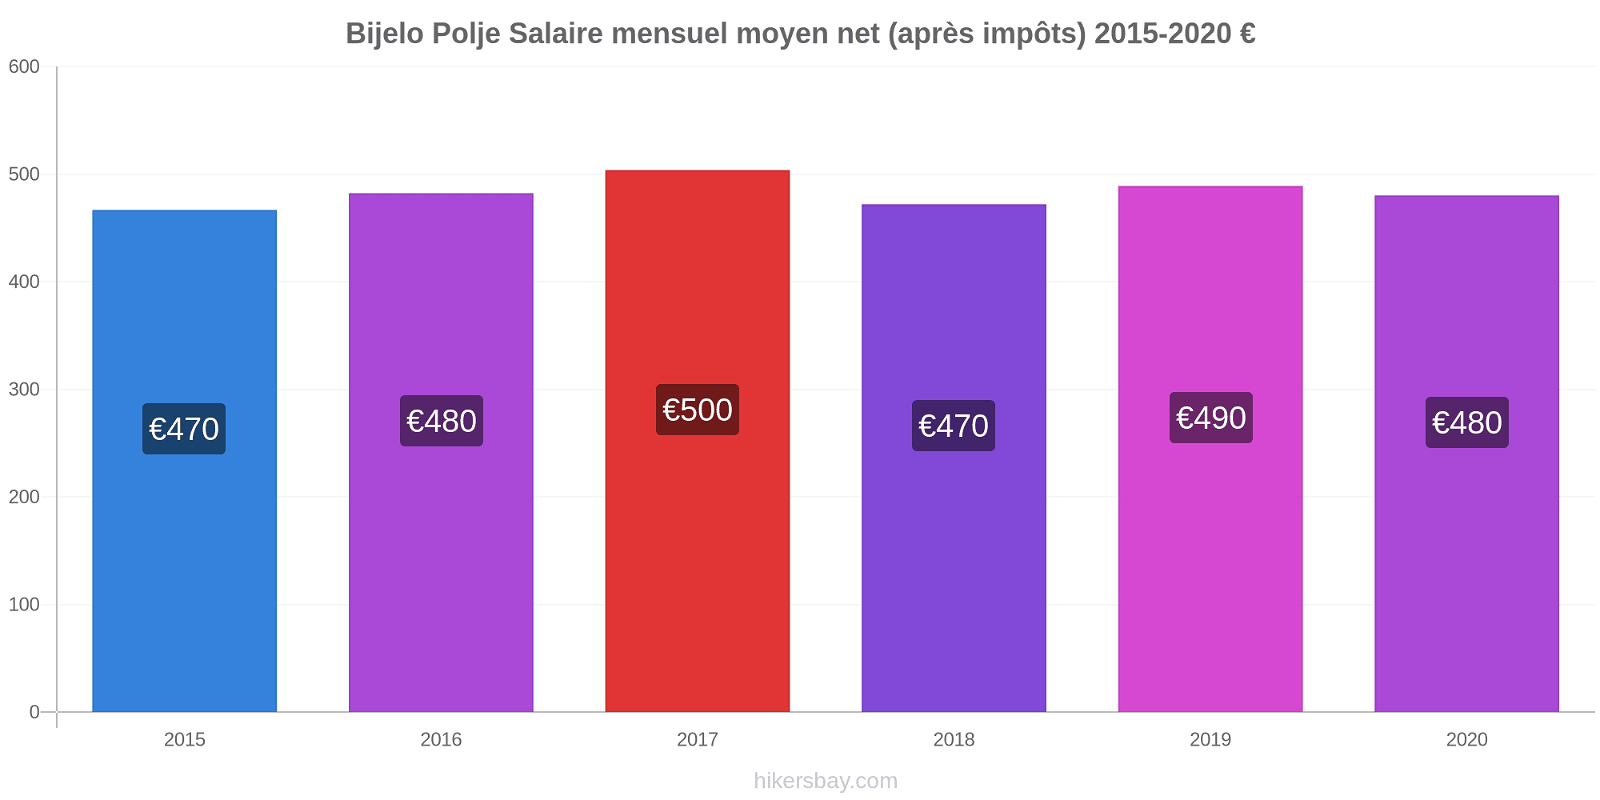 Bijelo Polje changements de prix Salaire mensuel Net (après impôts) hikersbay.com